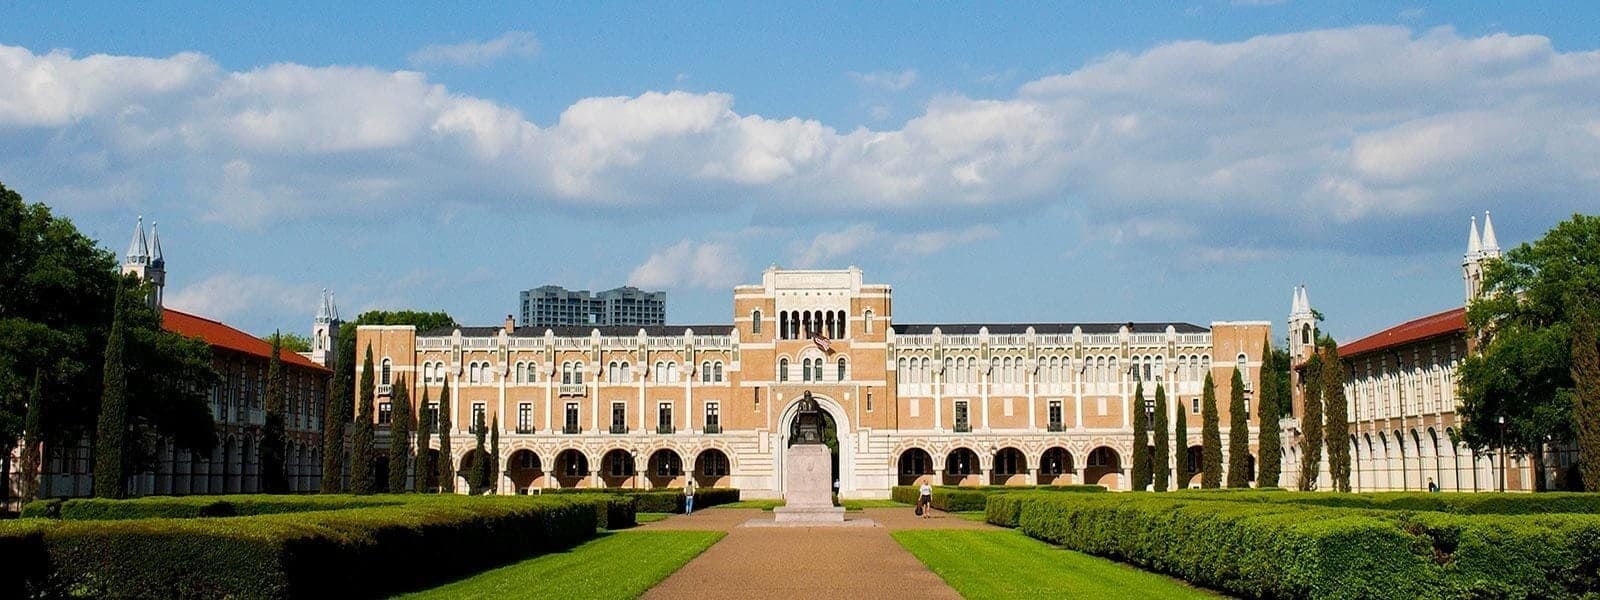 Best Colleges & Universities in Texas | Rankings